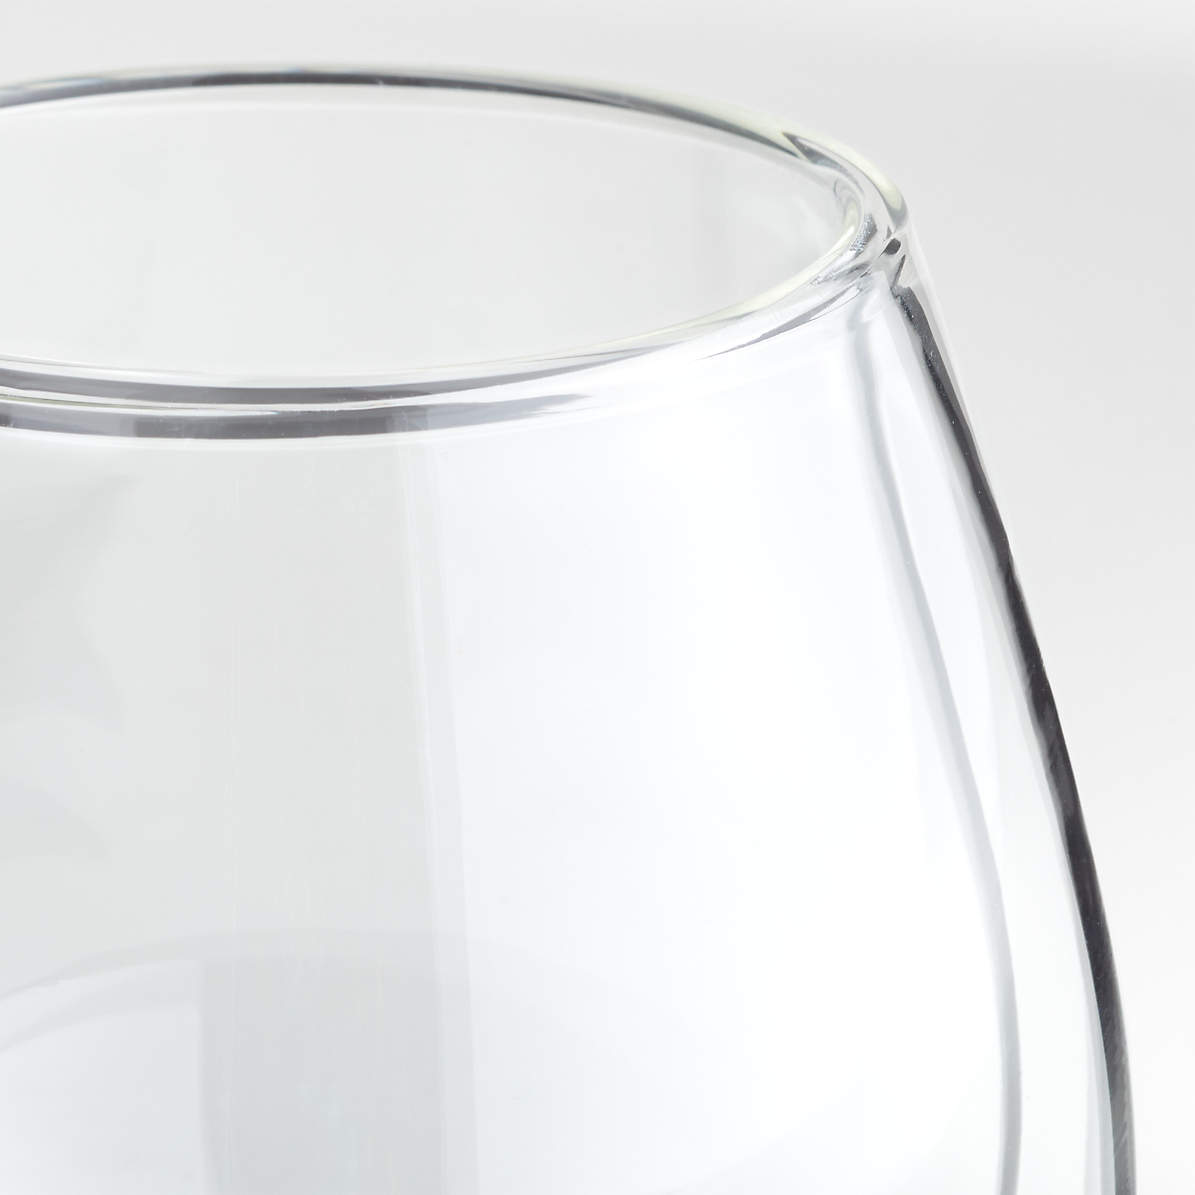 Bodum Skål Double Wall Whisky Glass, Set of 2 - Worldshop